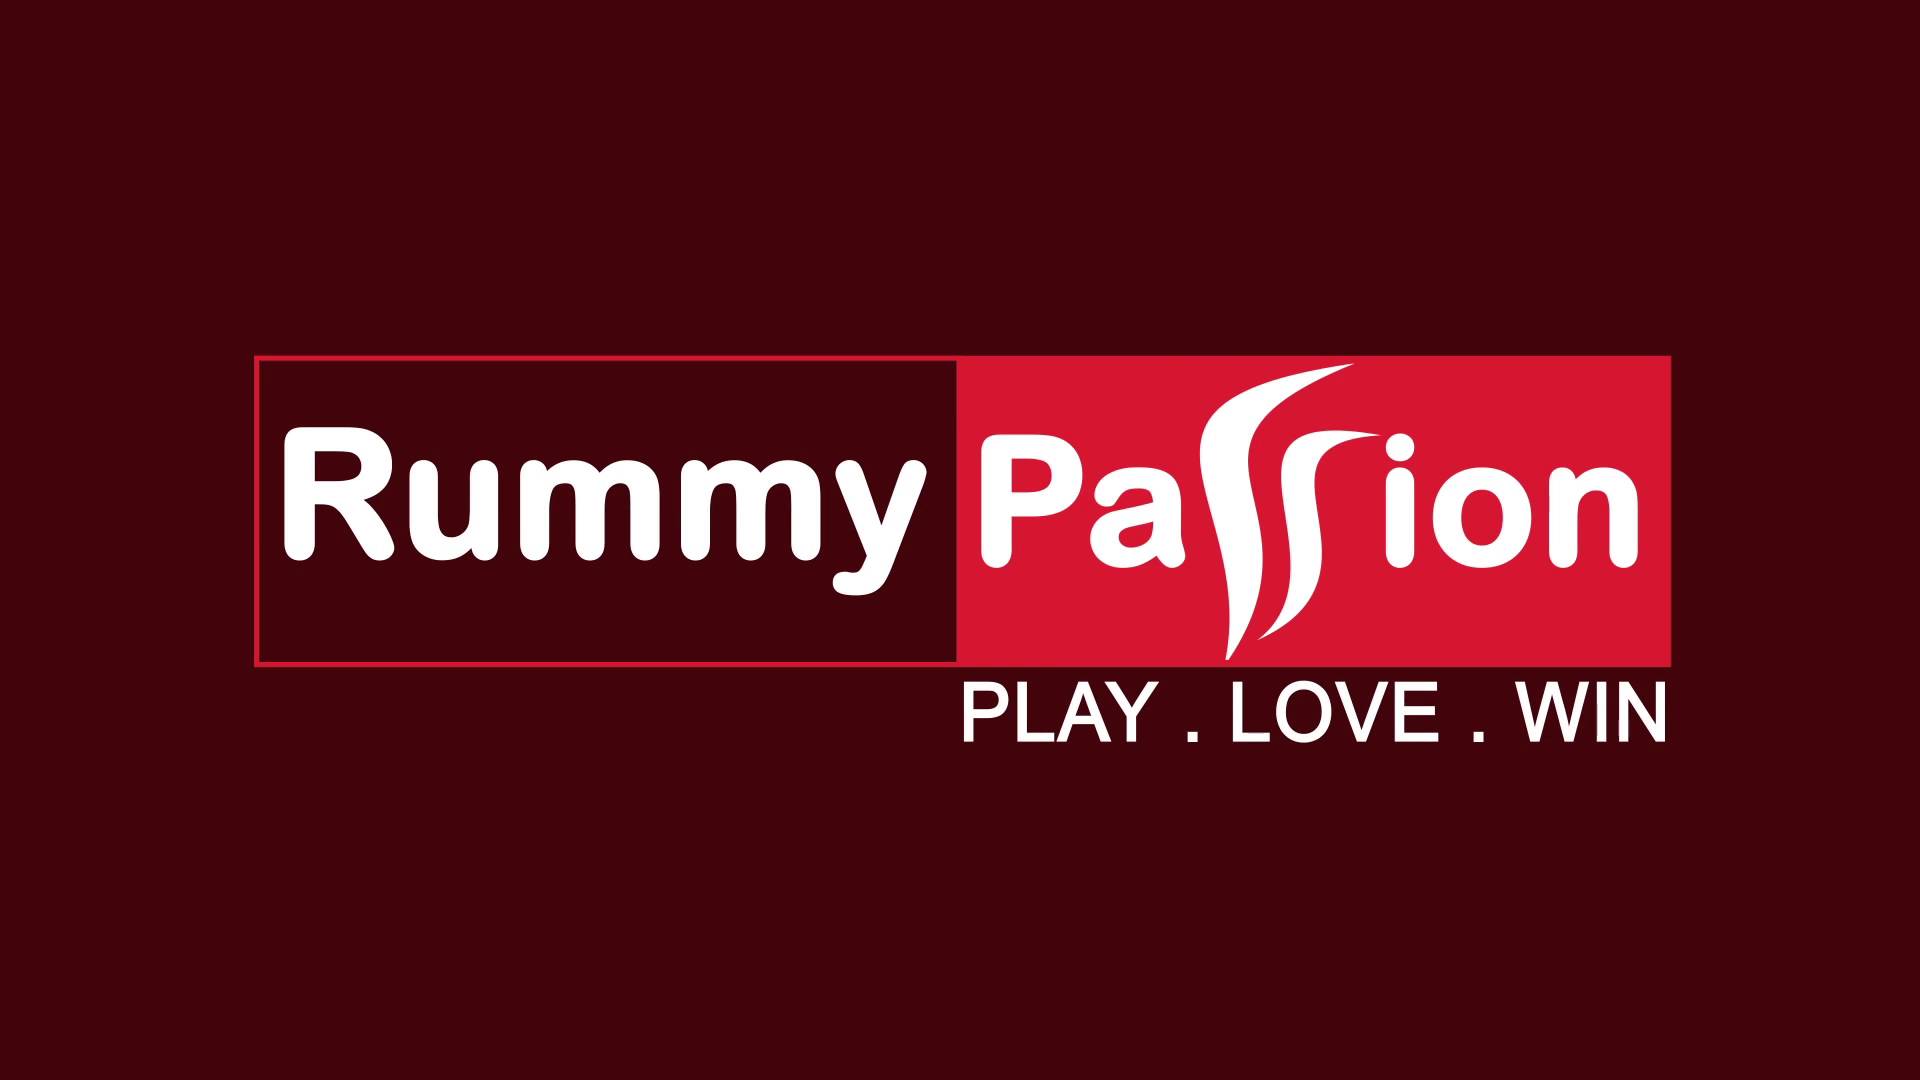 Rummy Passion logo